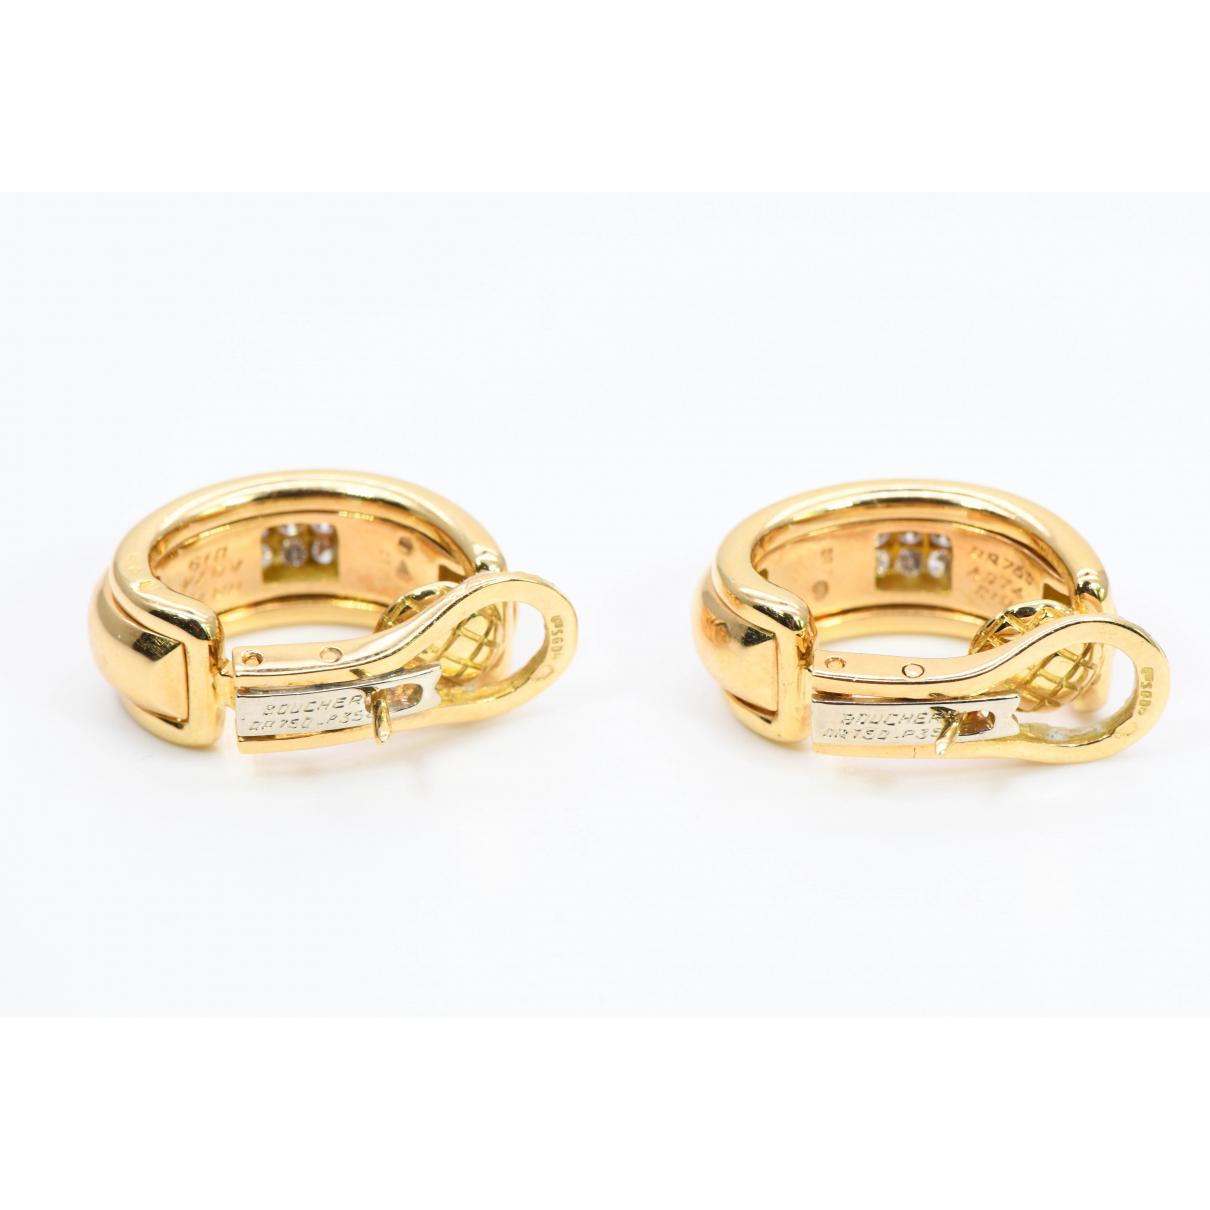 Buy Boucheron Yellow gold earrings online